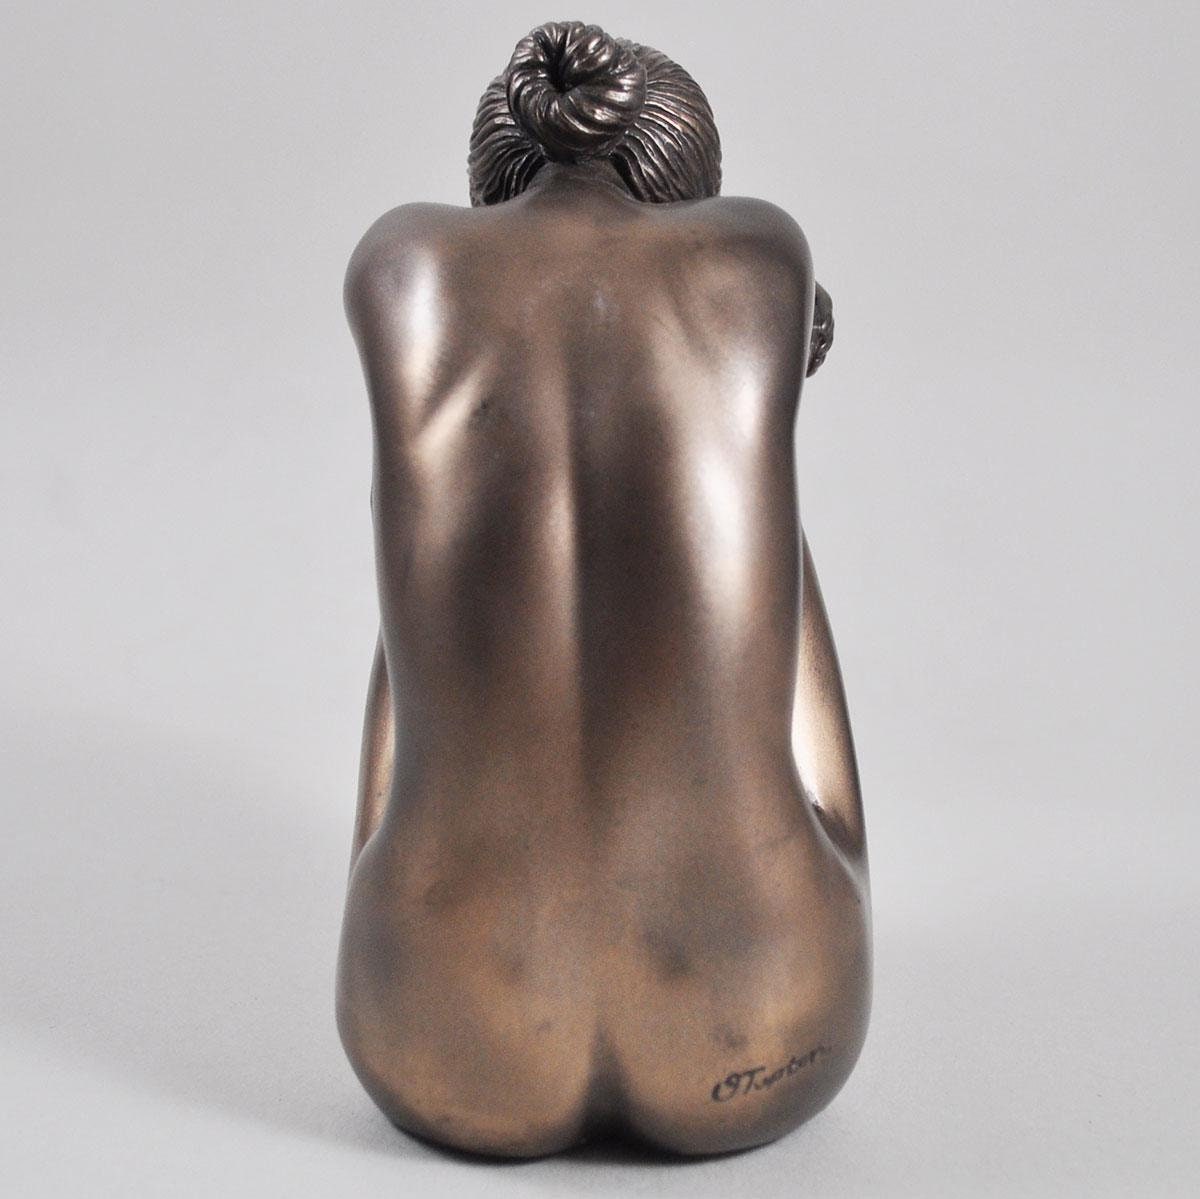 Olivia female bronze figurine, bronze sculpture, home decor